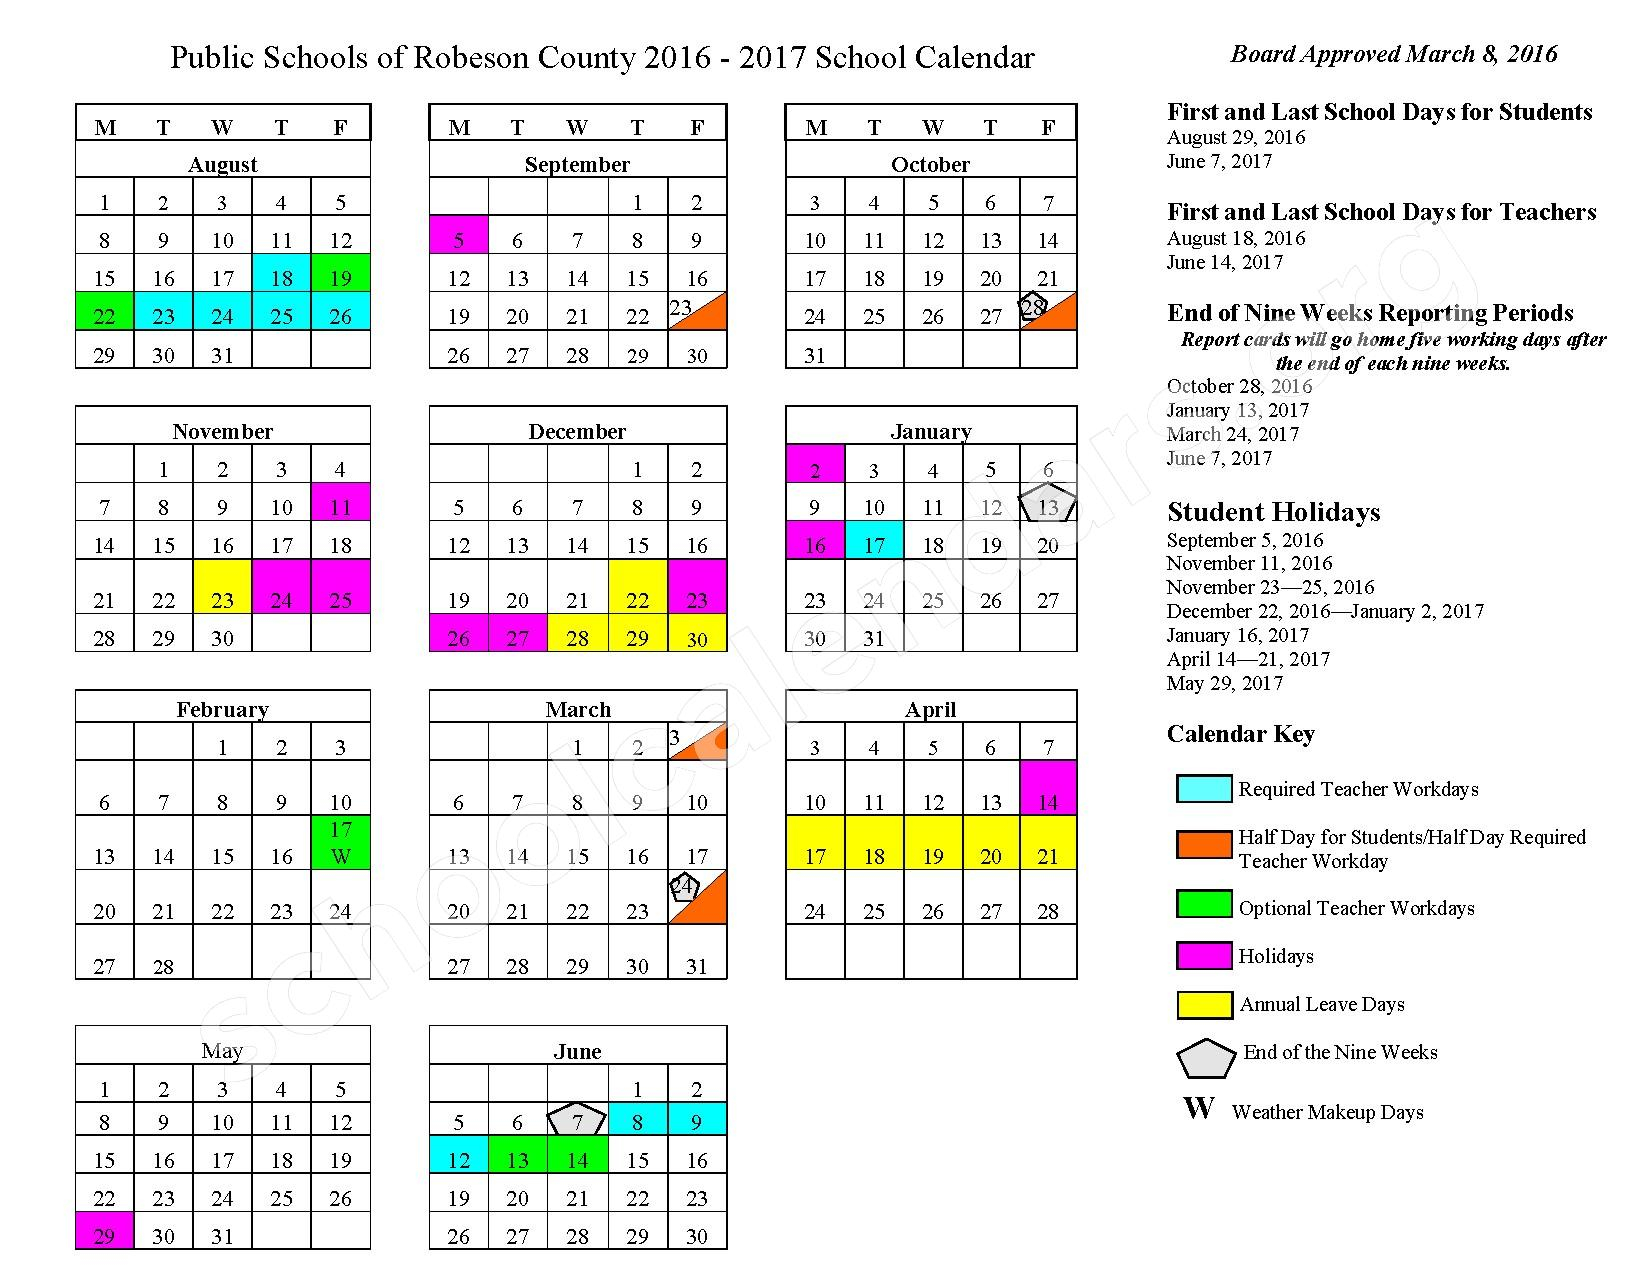 Public Schools Of Robeson County Calendar 2023